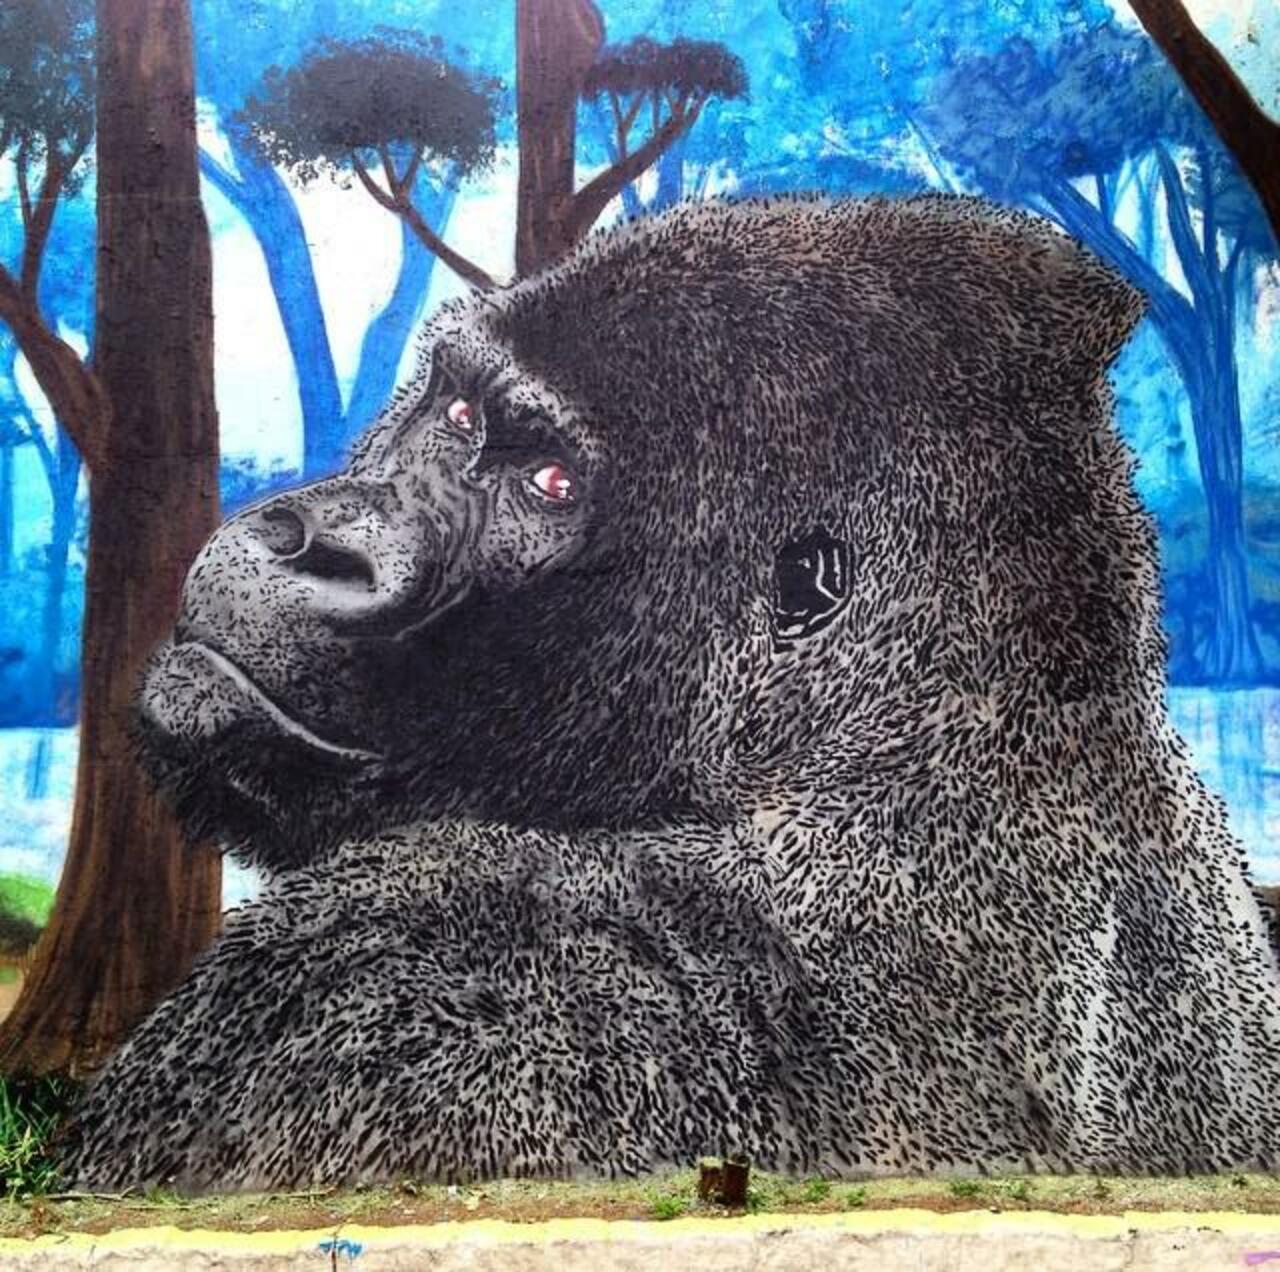 Superb Nature in Street Art piece by Thassio in São Paulo, Brazil  

#art #mural #graffiti #streetart http://t.co/8Ryb9cdgeU